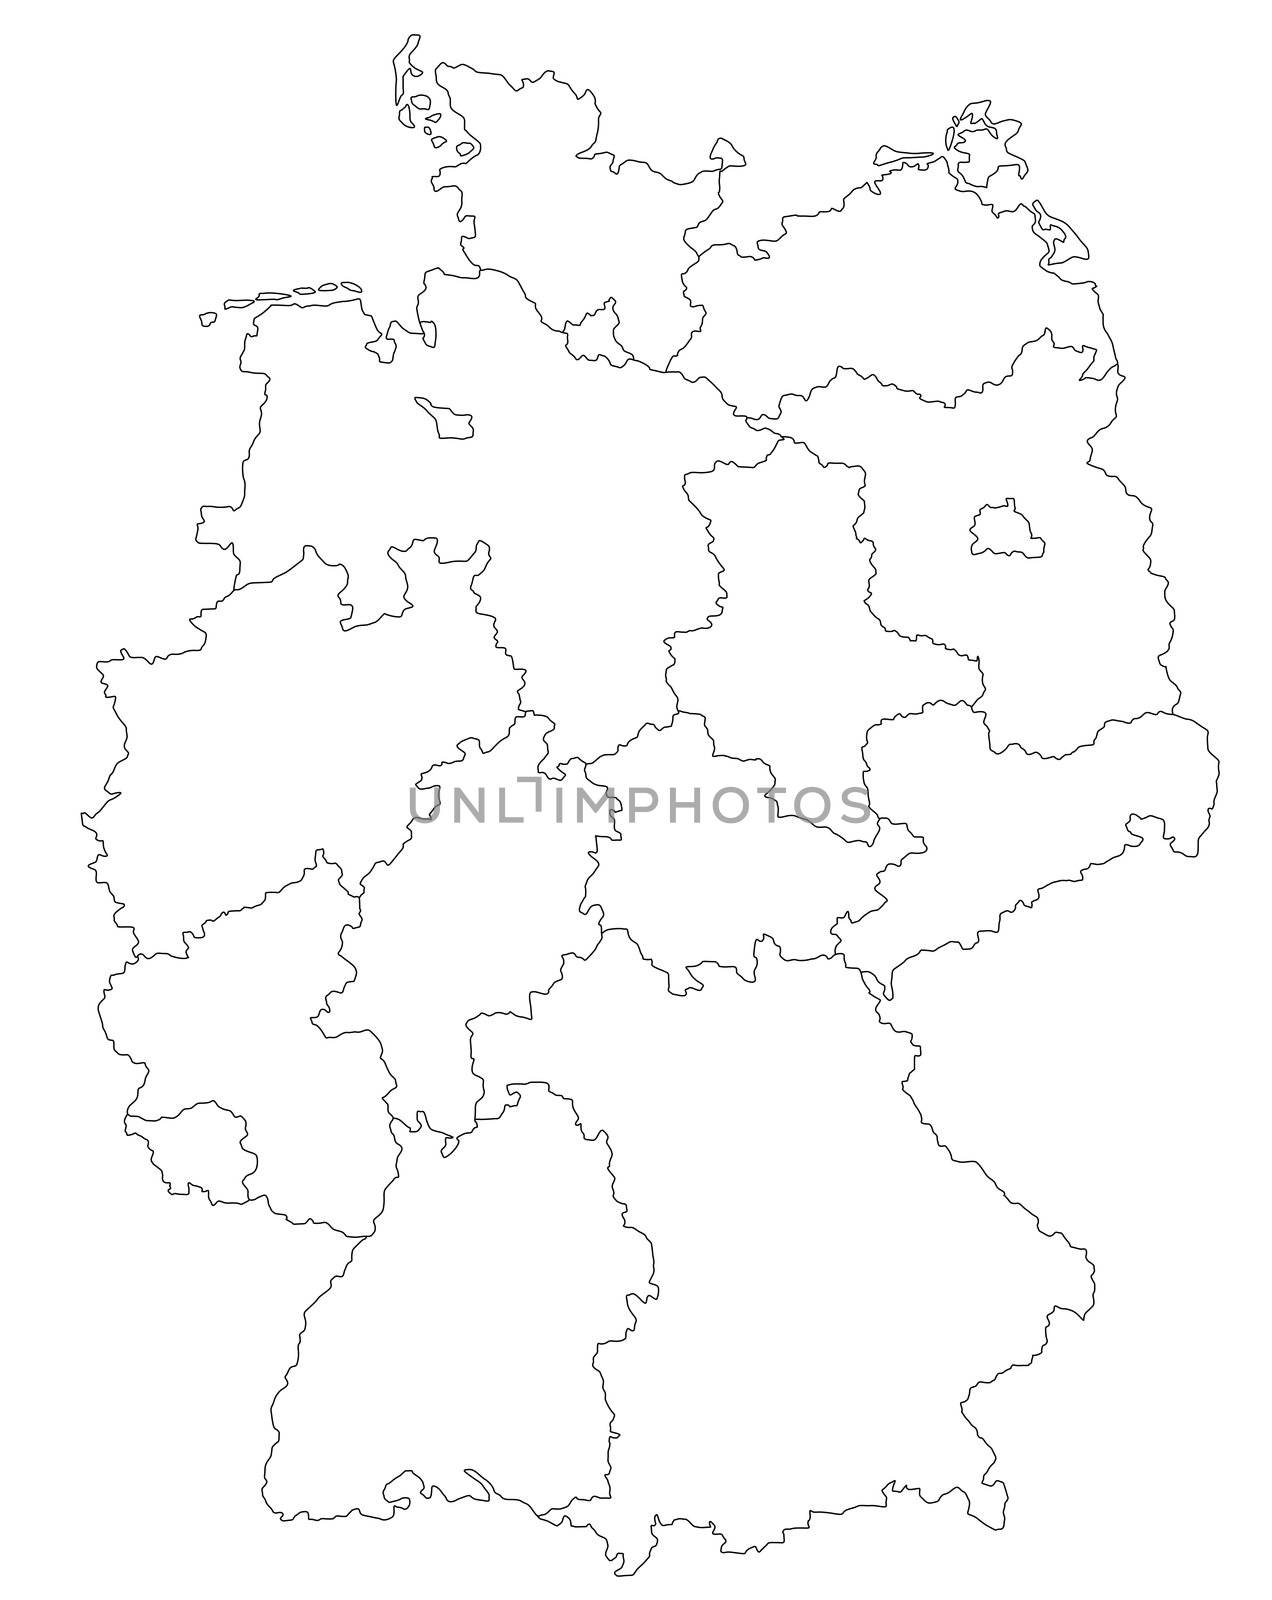 Map Of Germany by kaarsten